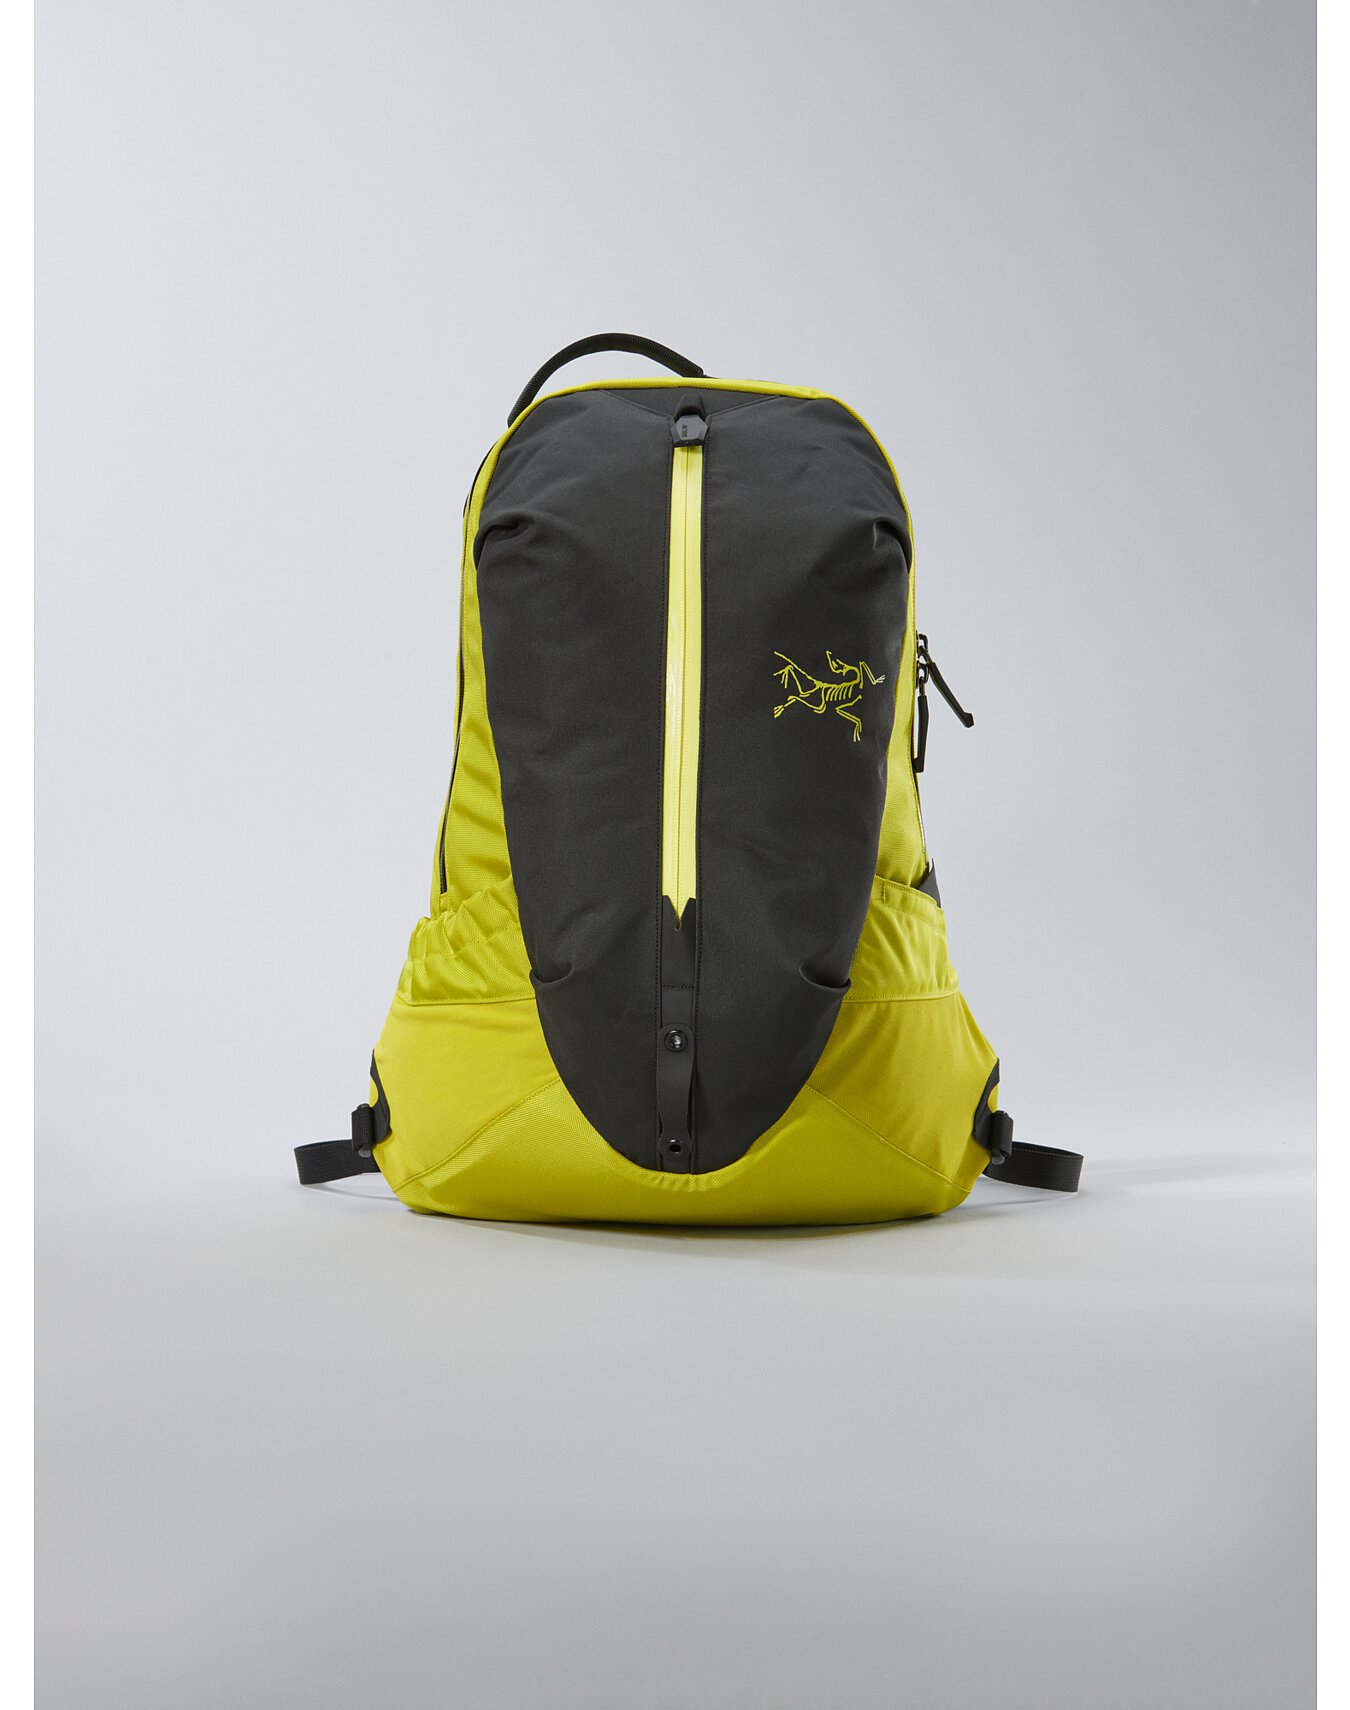 Arro 16 Backpack | Arc'teryx